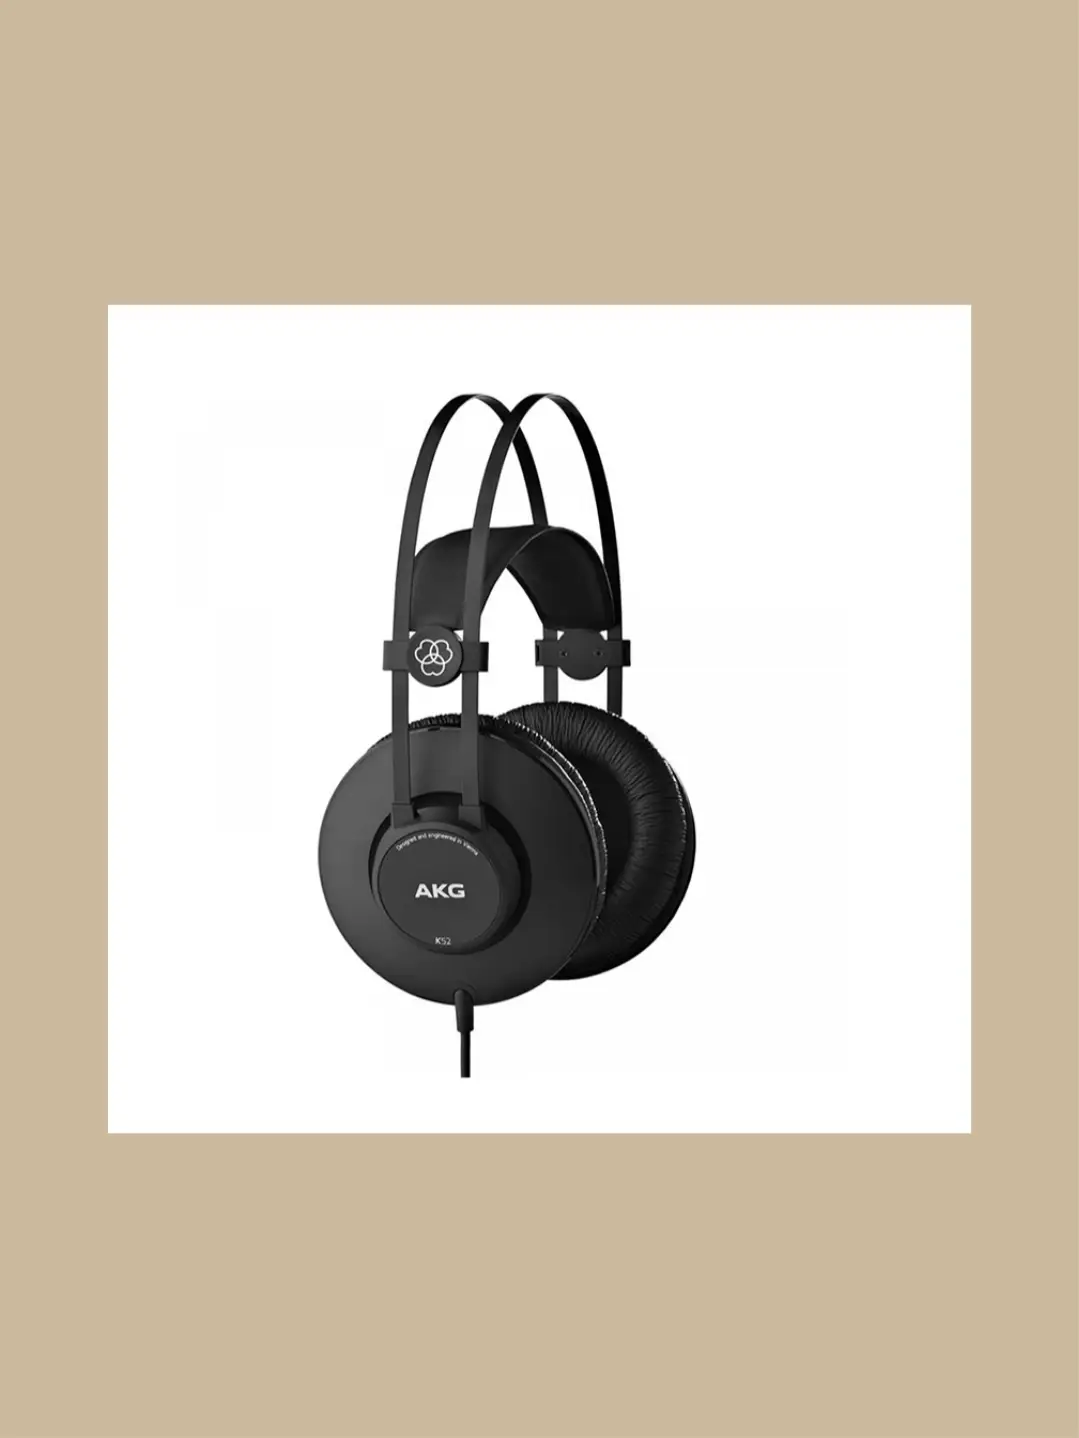 AKG K52 Studio Headphones - Are they worth it? 